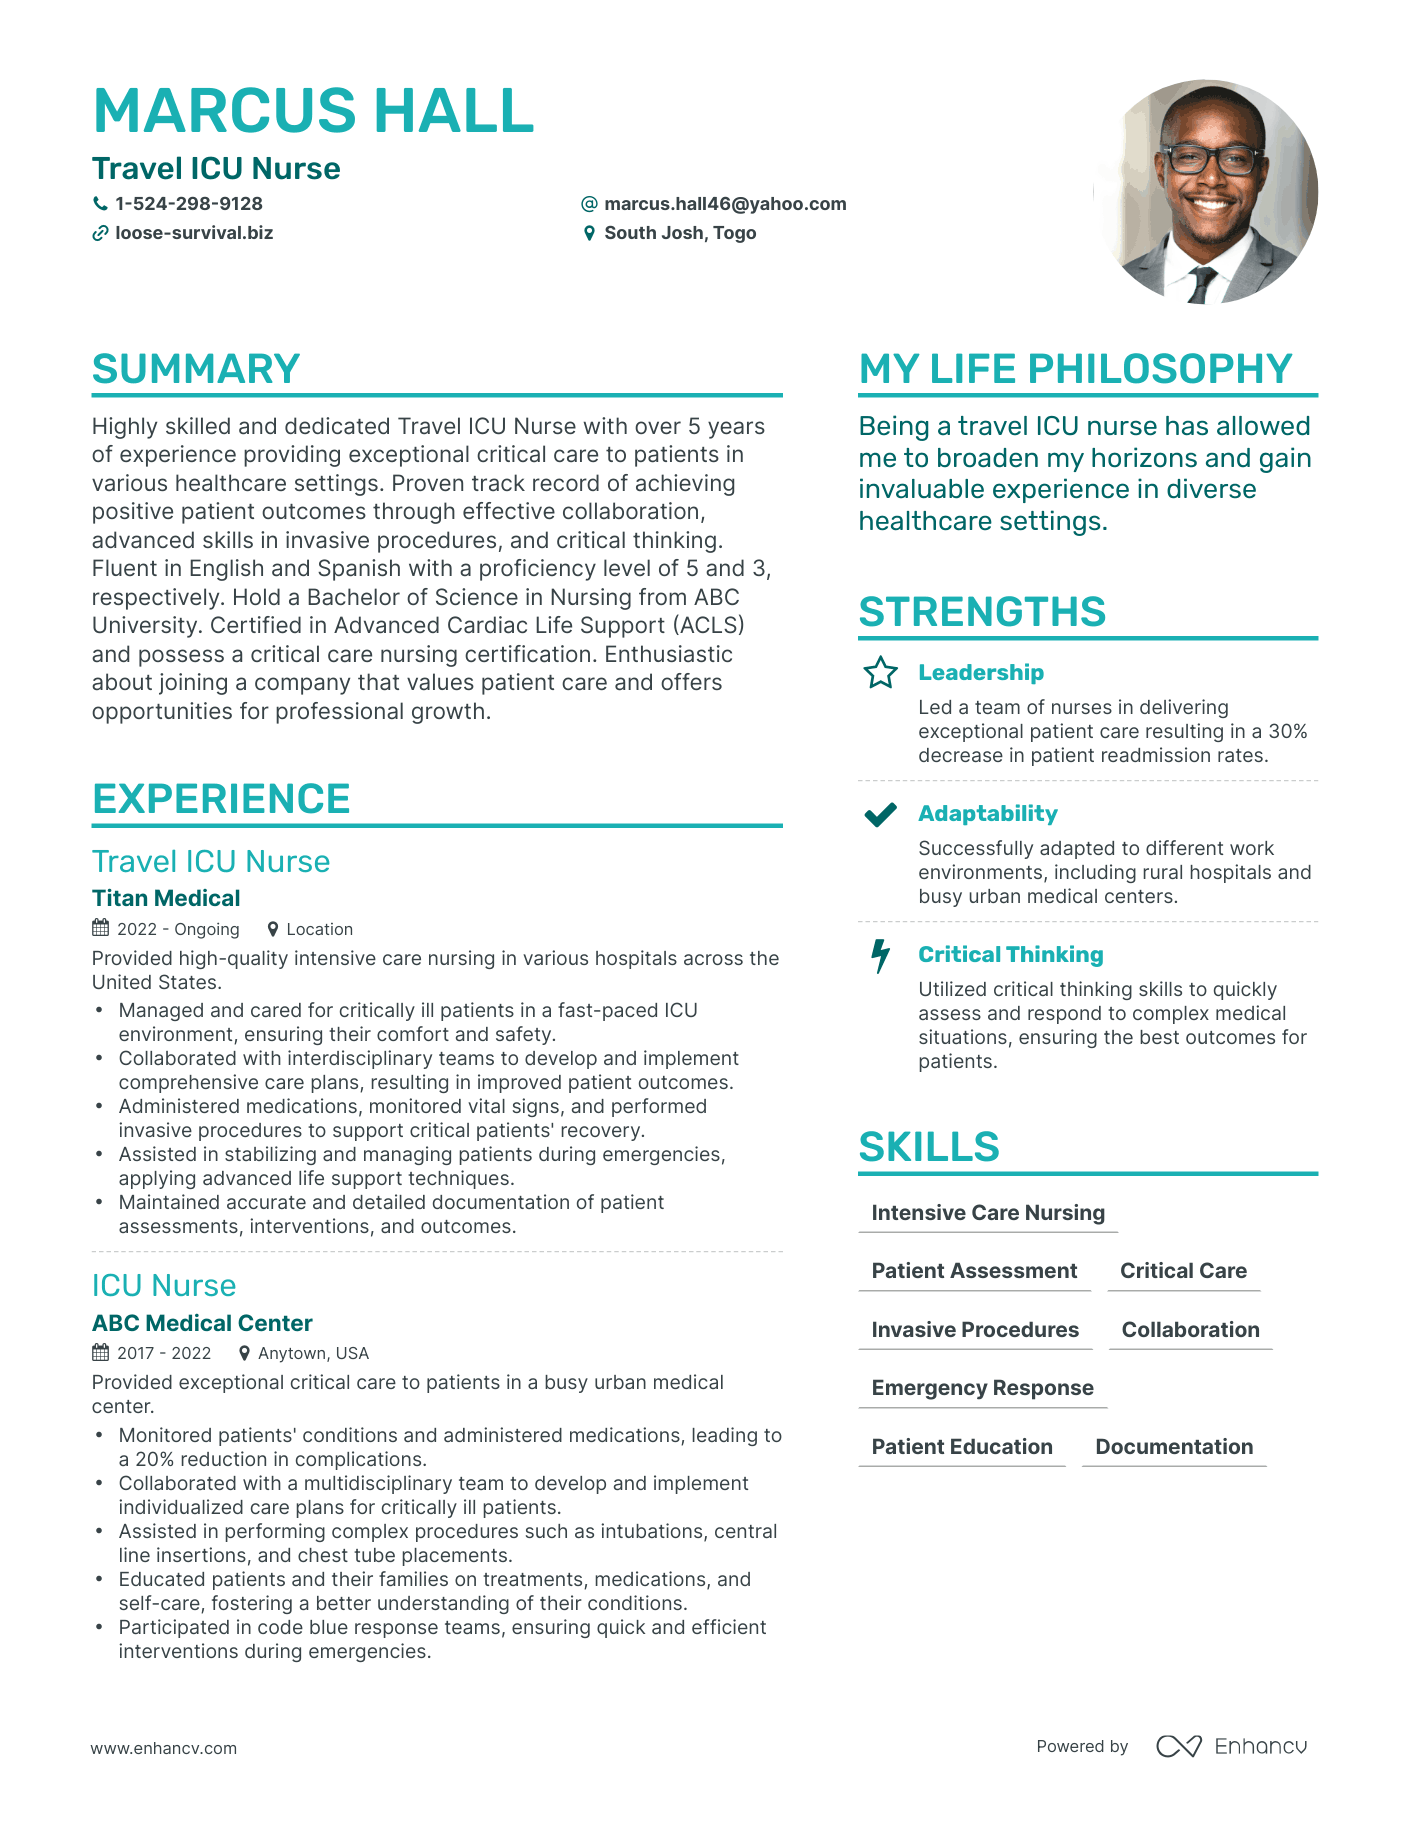 Travel ICU Nurse resume example